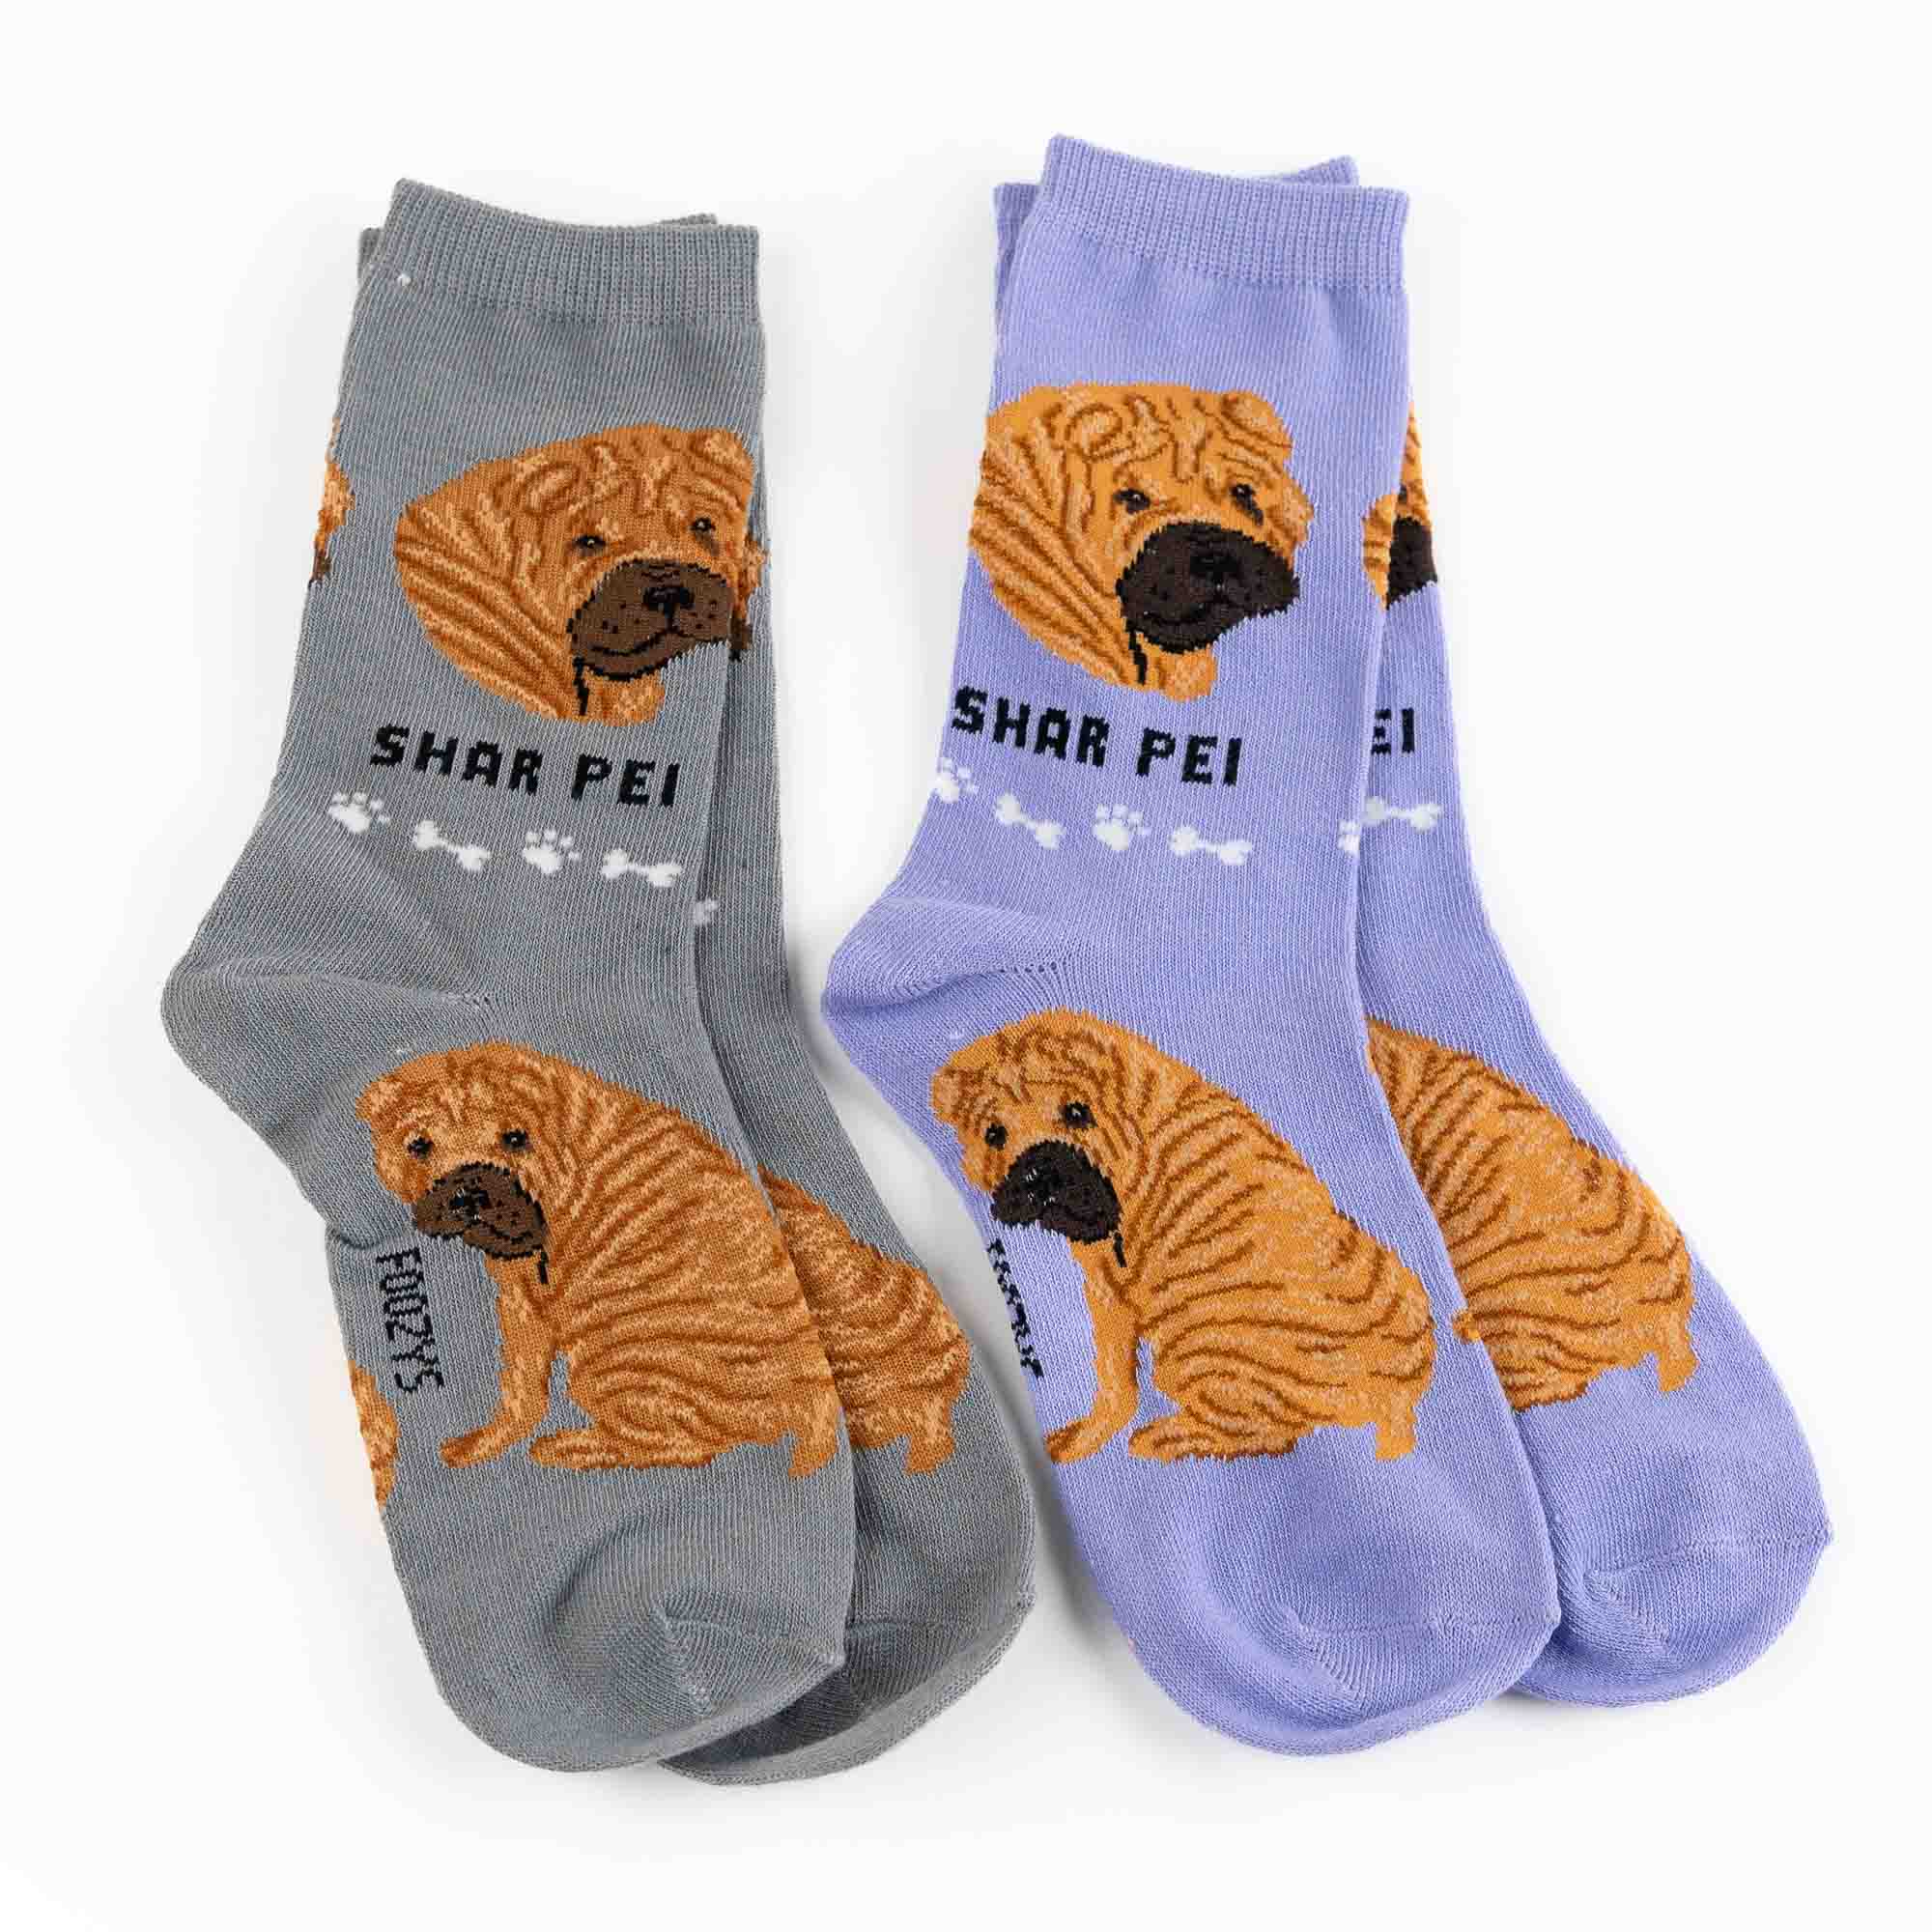 My Favorite Dog Breed Socks ❤️ Shar Pei - 2 Set Collection